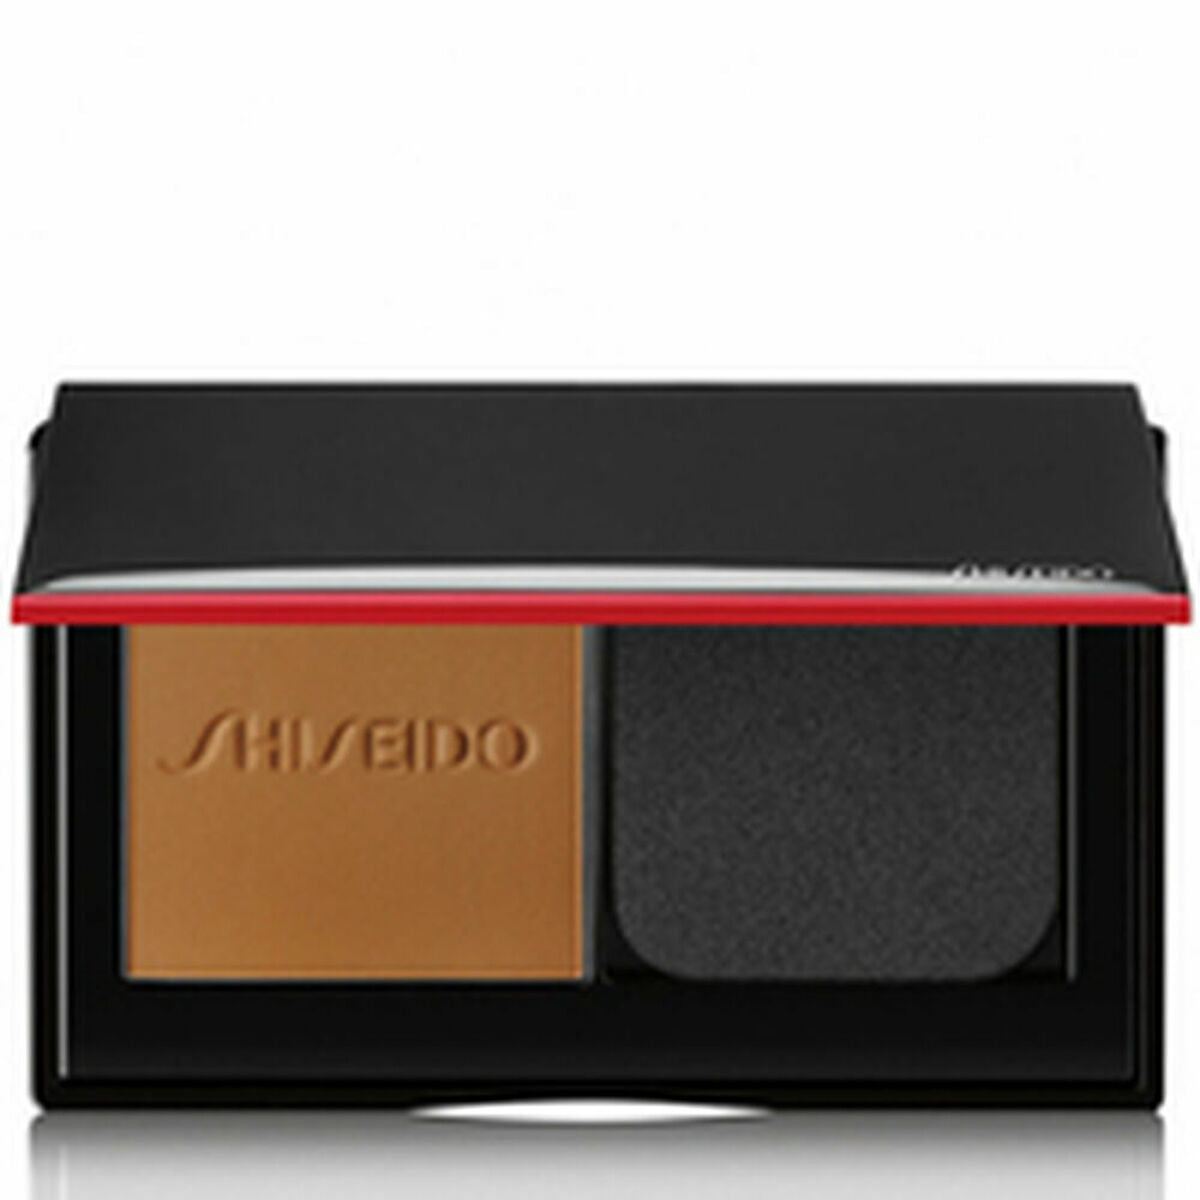 Powder Make-up Base Shiseido 729238161252-0